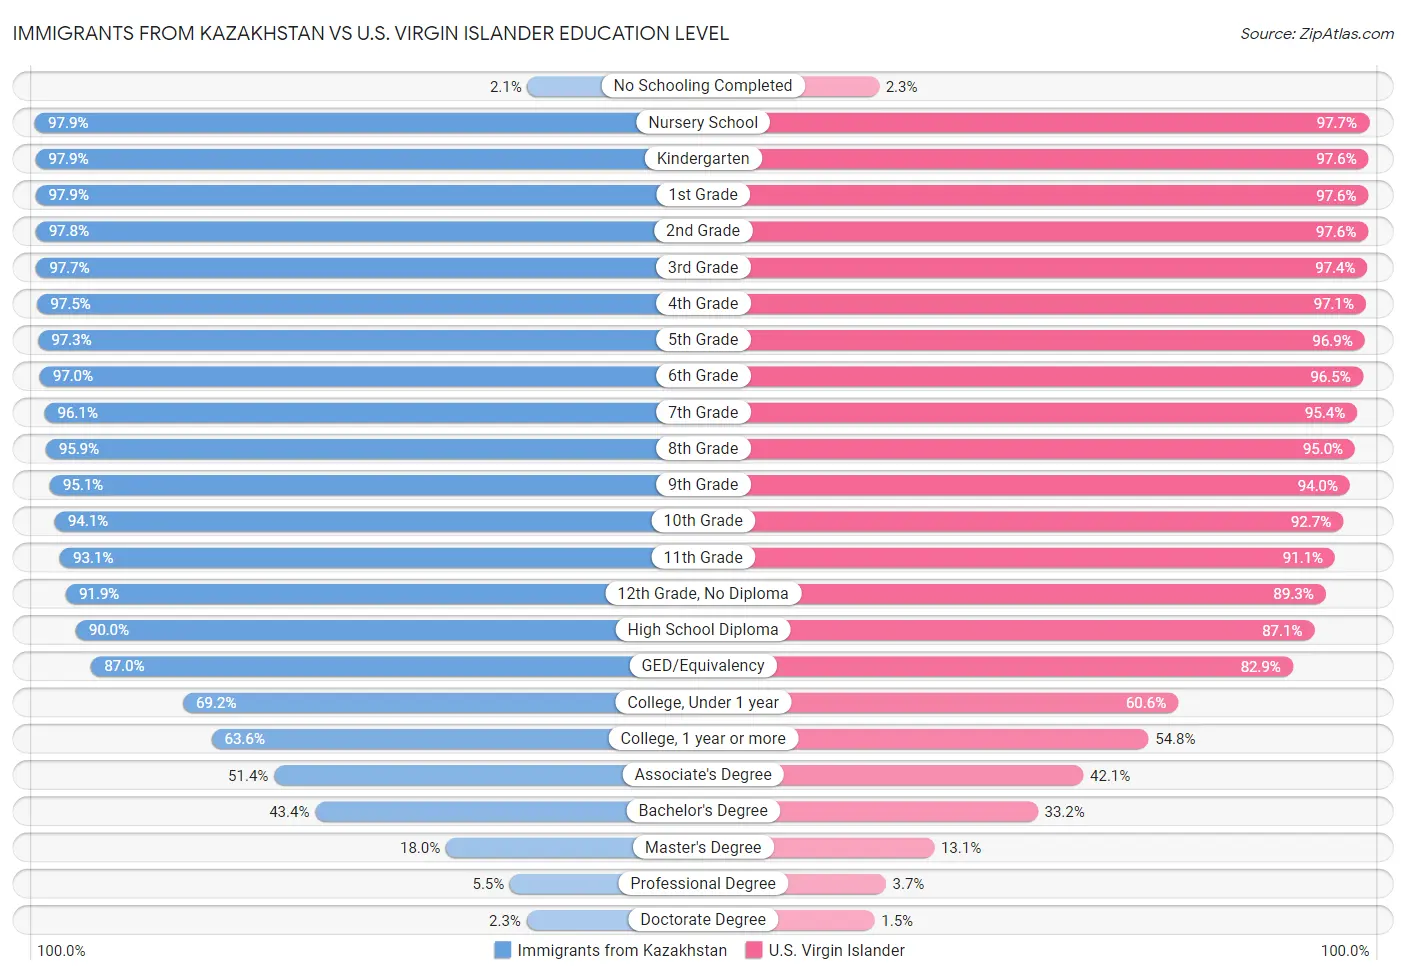 Immigrants from Kazakhstan vs U.S. Virgin Islander Education Level